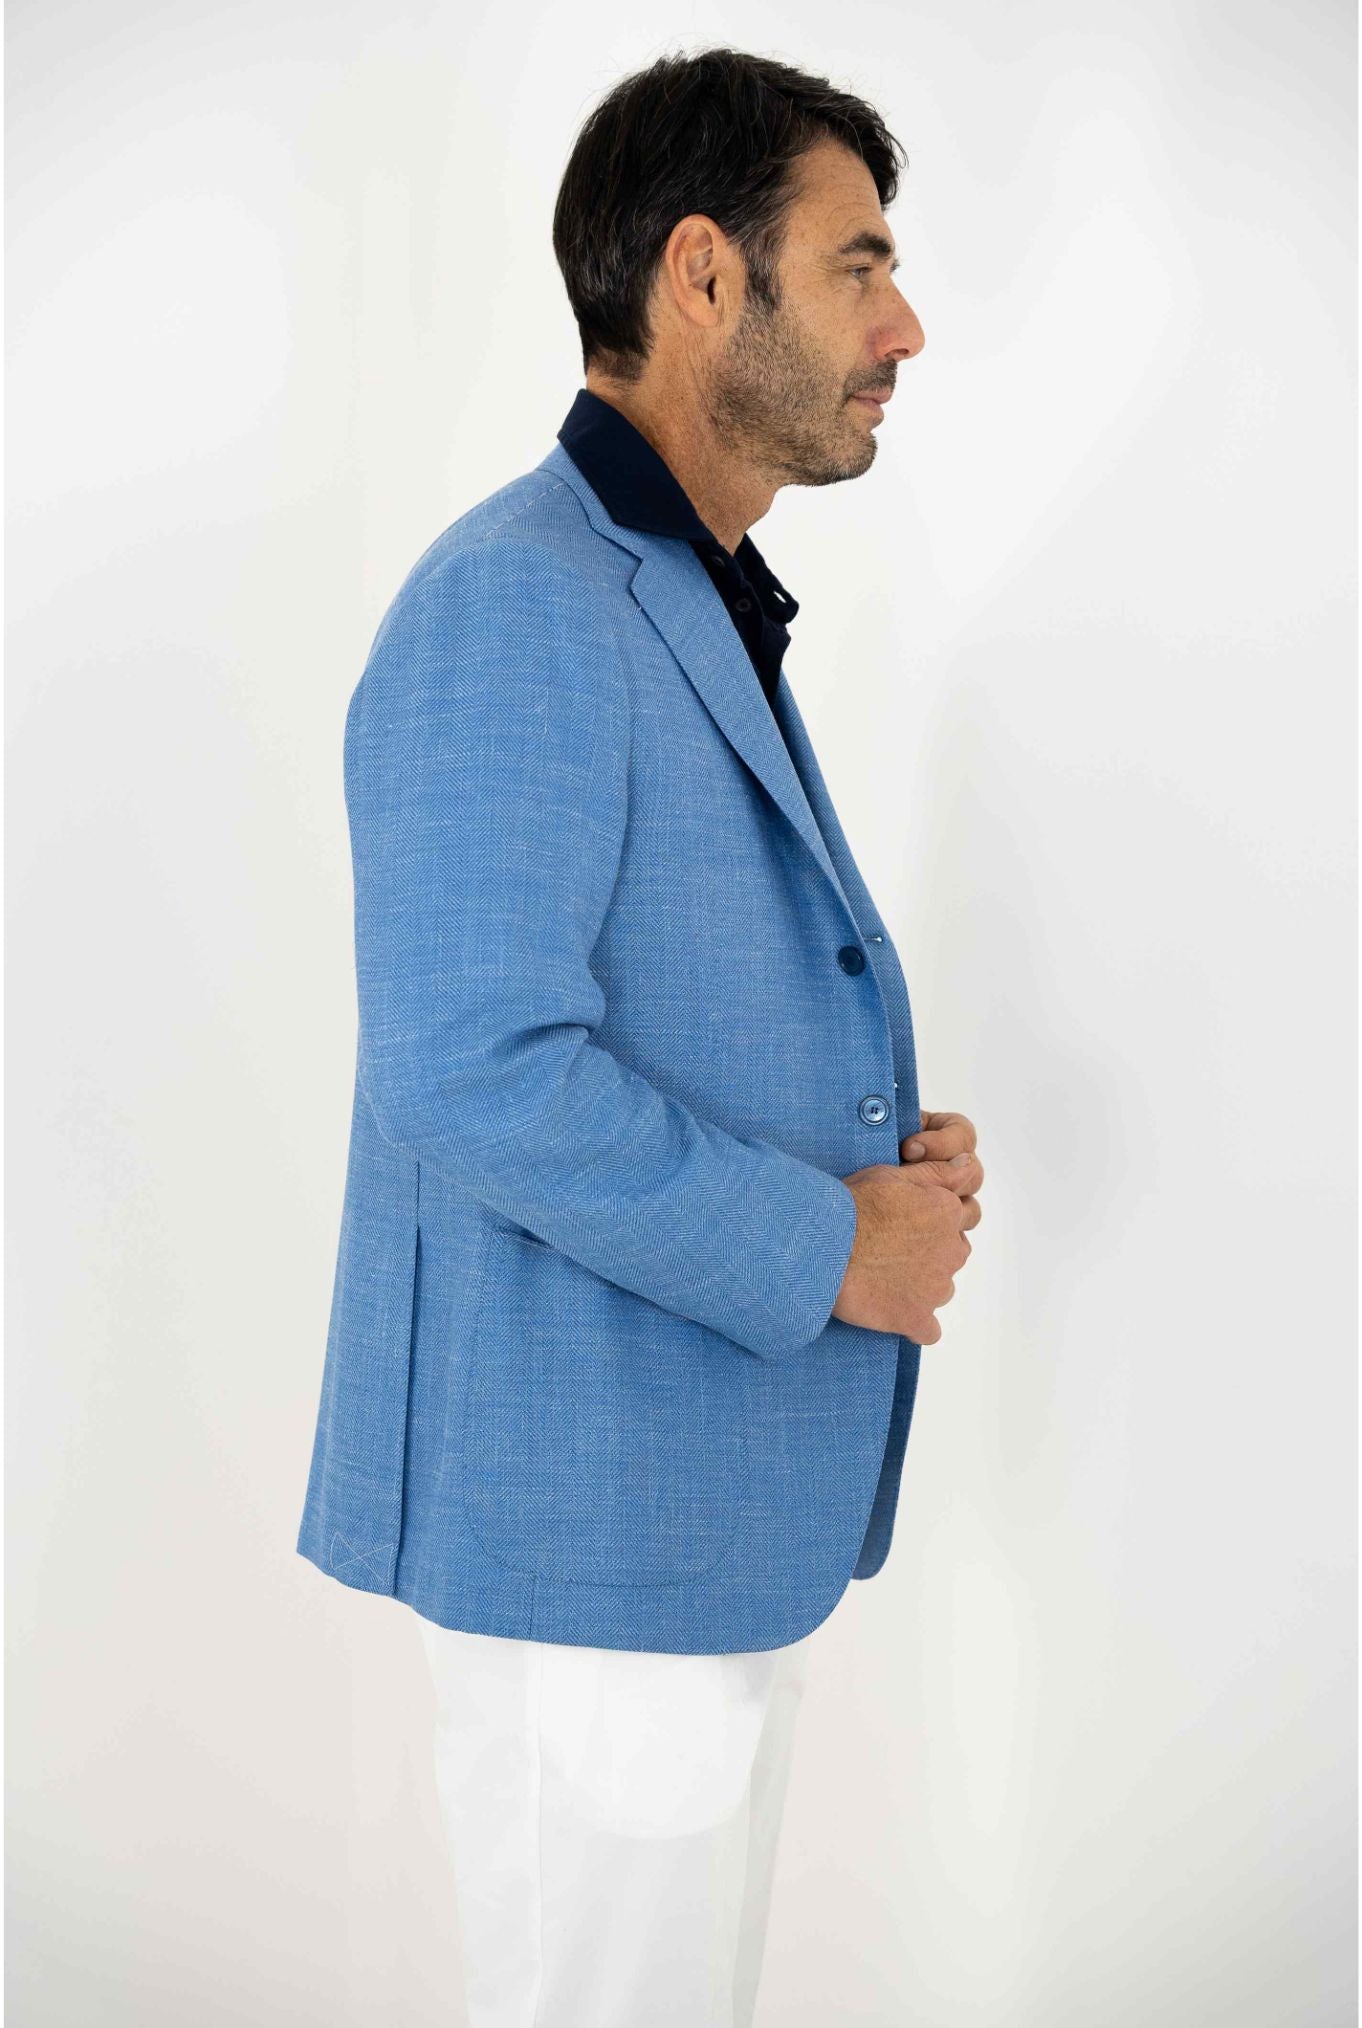 CESARE ATTOLINI Light Blue Wool, Silk and Linen Jacket